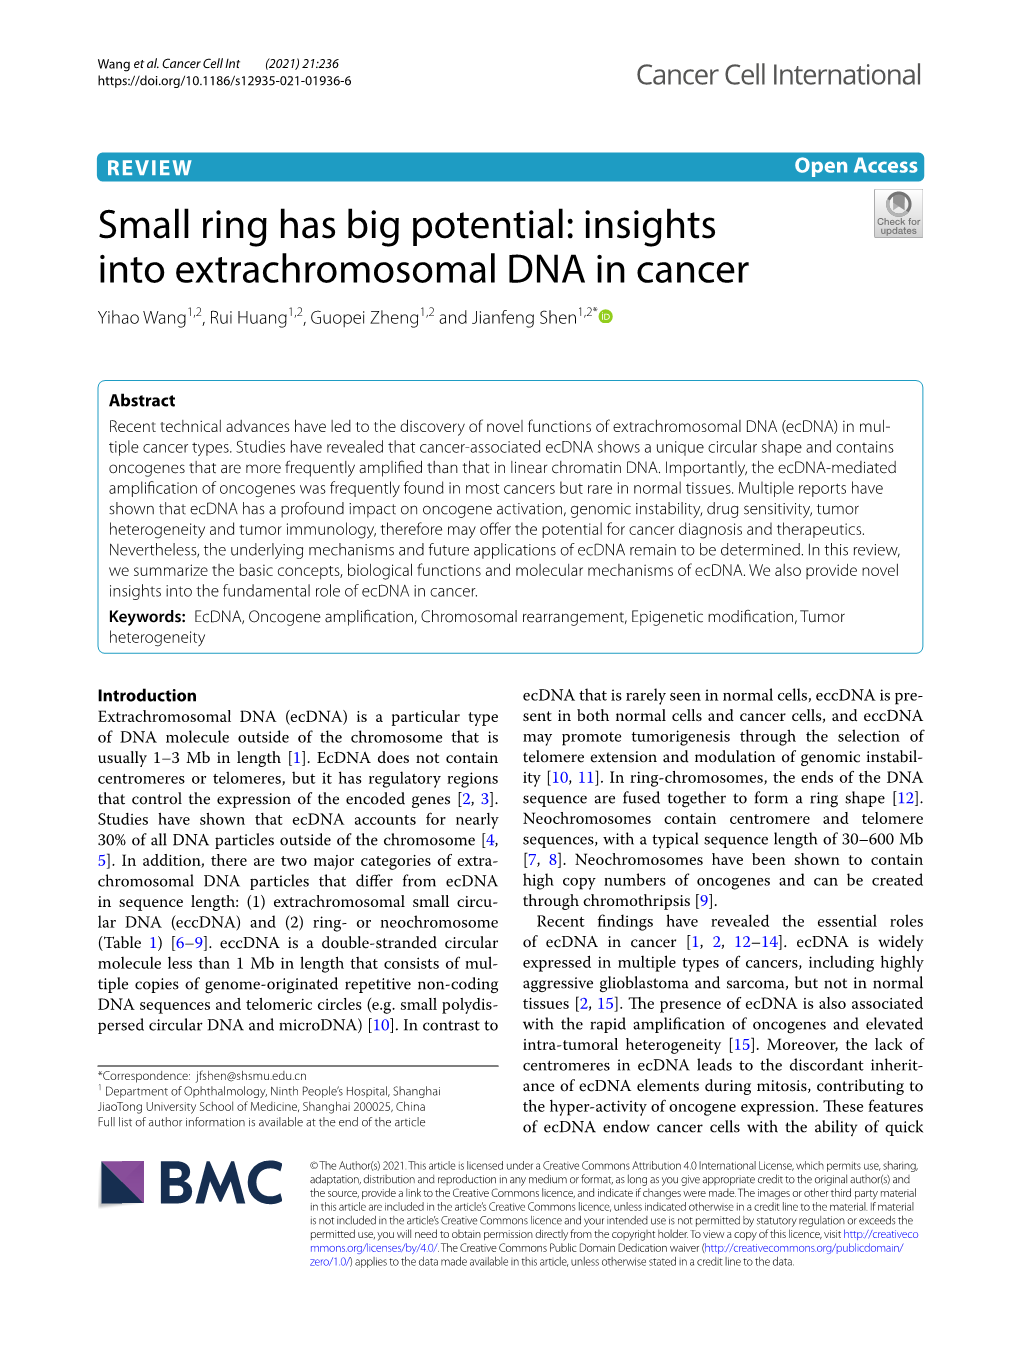 Small Ring Has Big Potential: Insights Into Extrachromosomal DNA in Cancer Yihao Wang1,2, Rui Huang1,2, Guopei Zheng1,2 and Jianfeng Shen1,2*